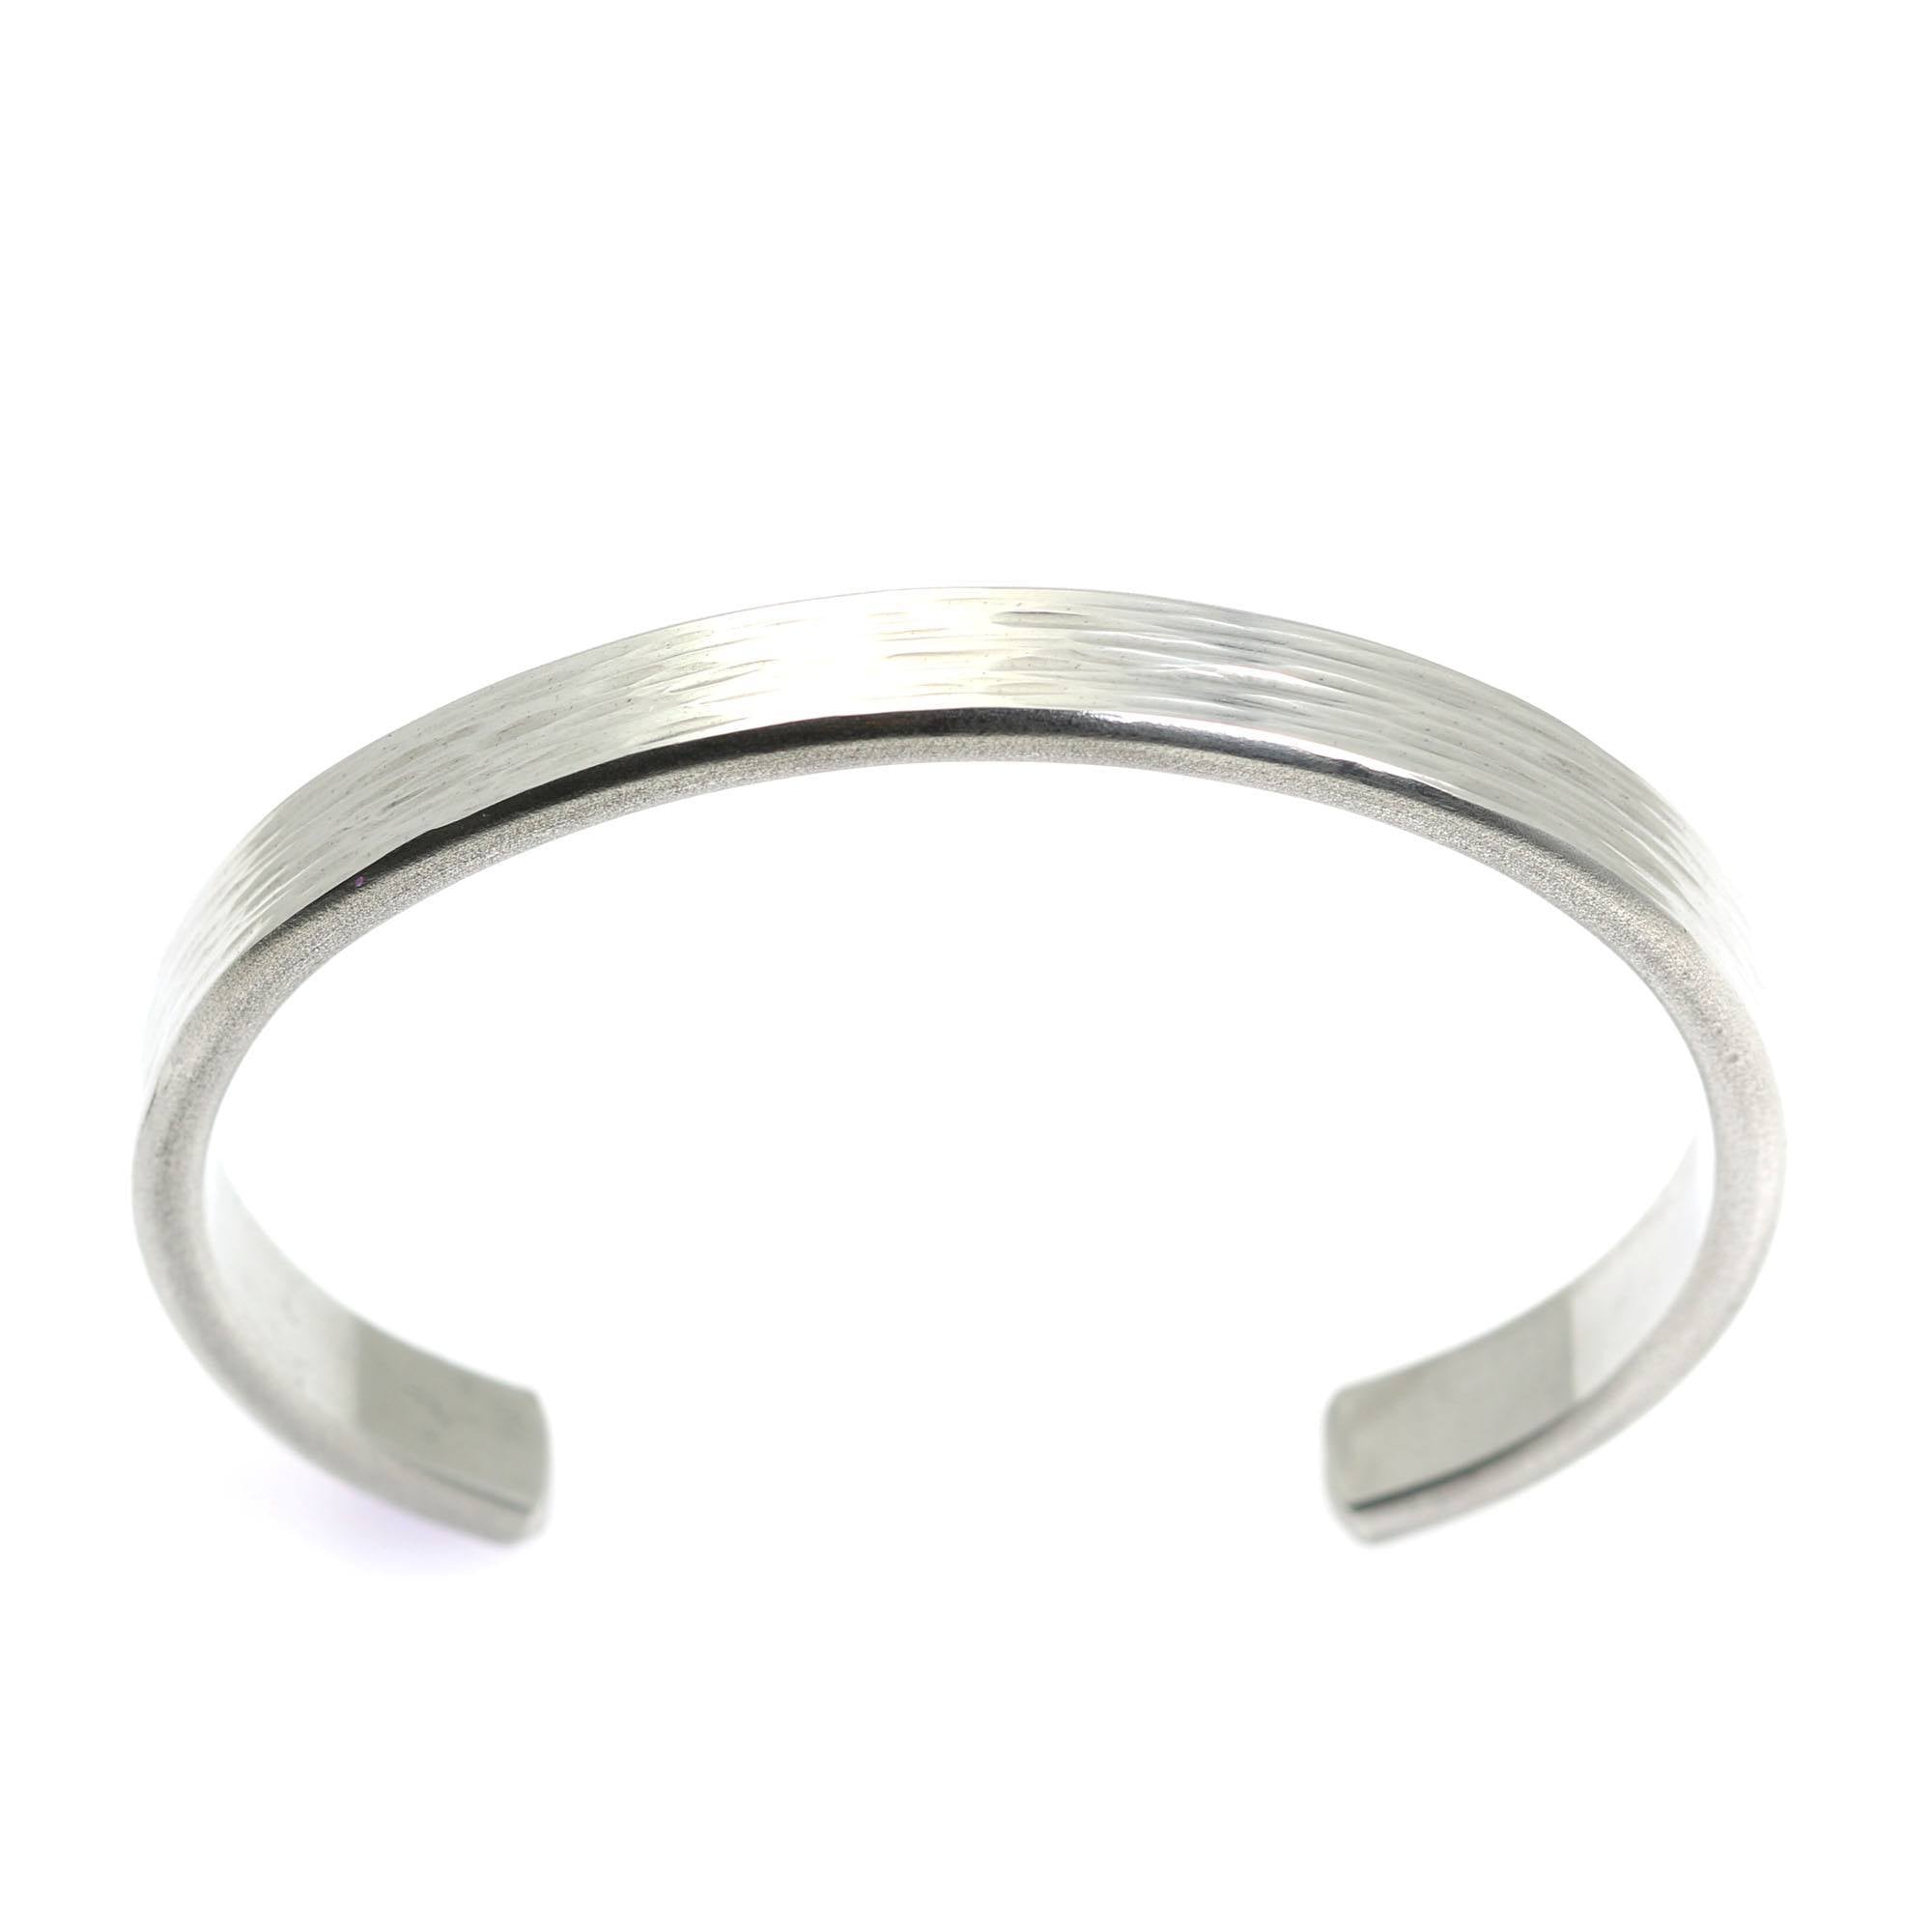 Top View of Thin Bark Aluminum Cuff Bracelet